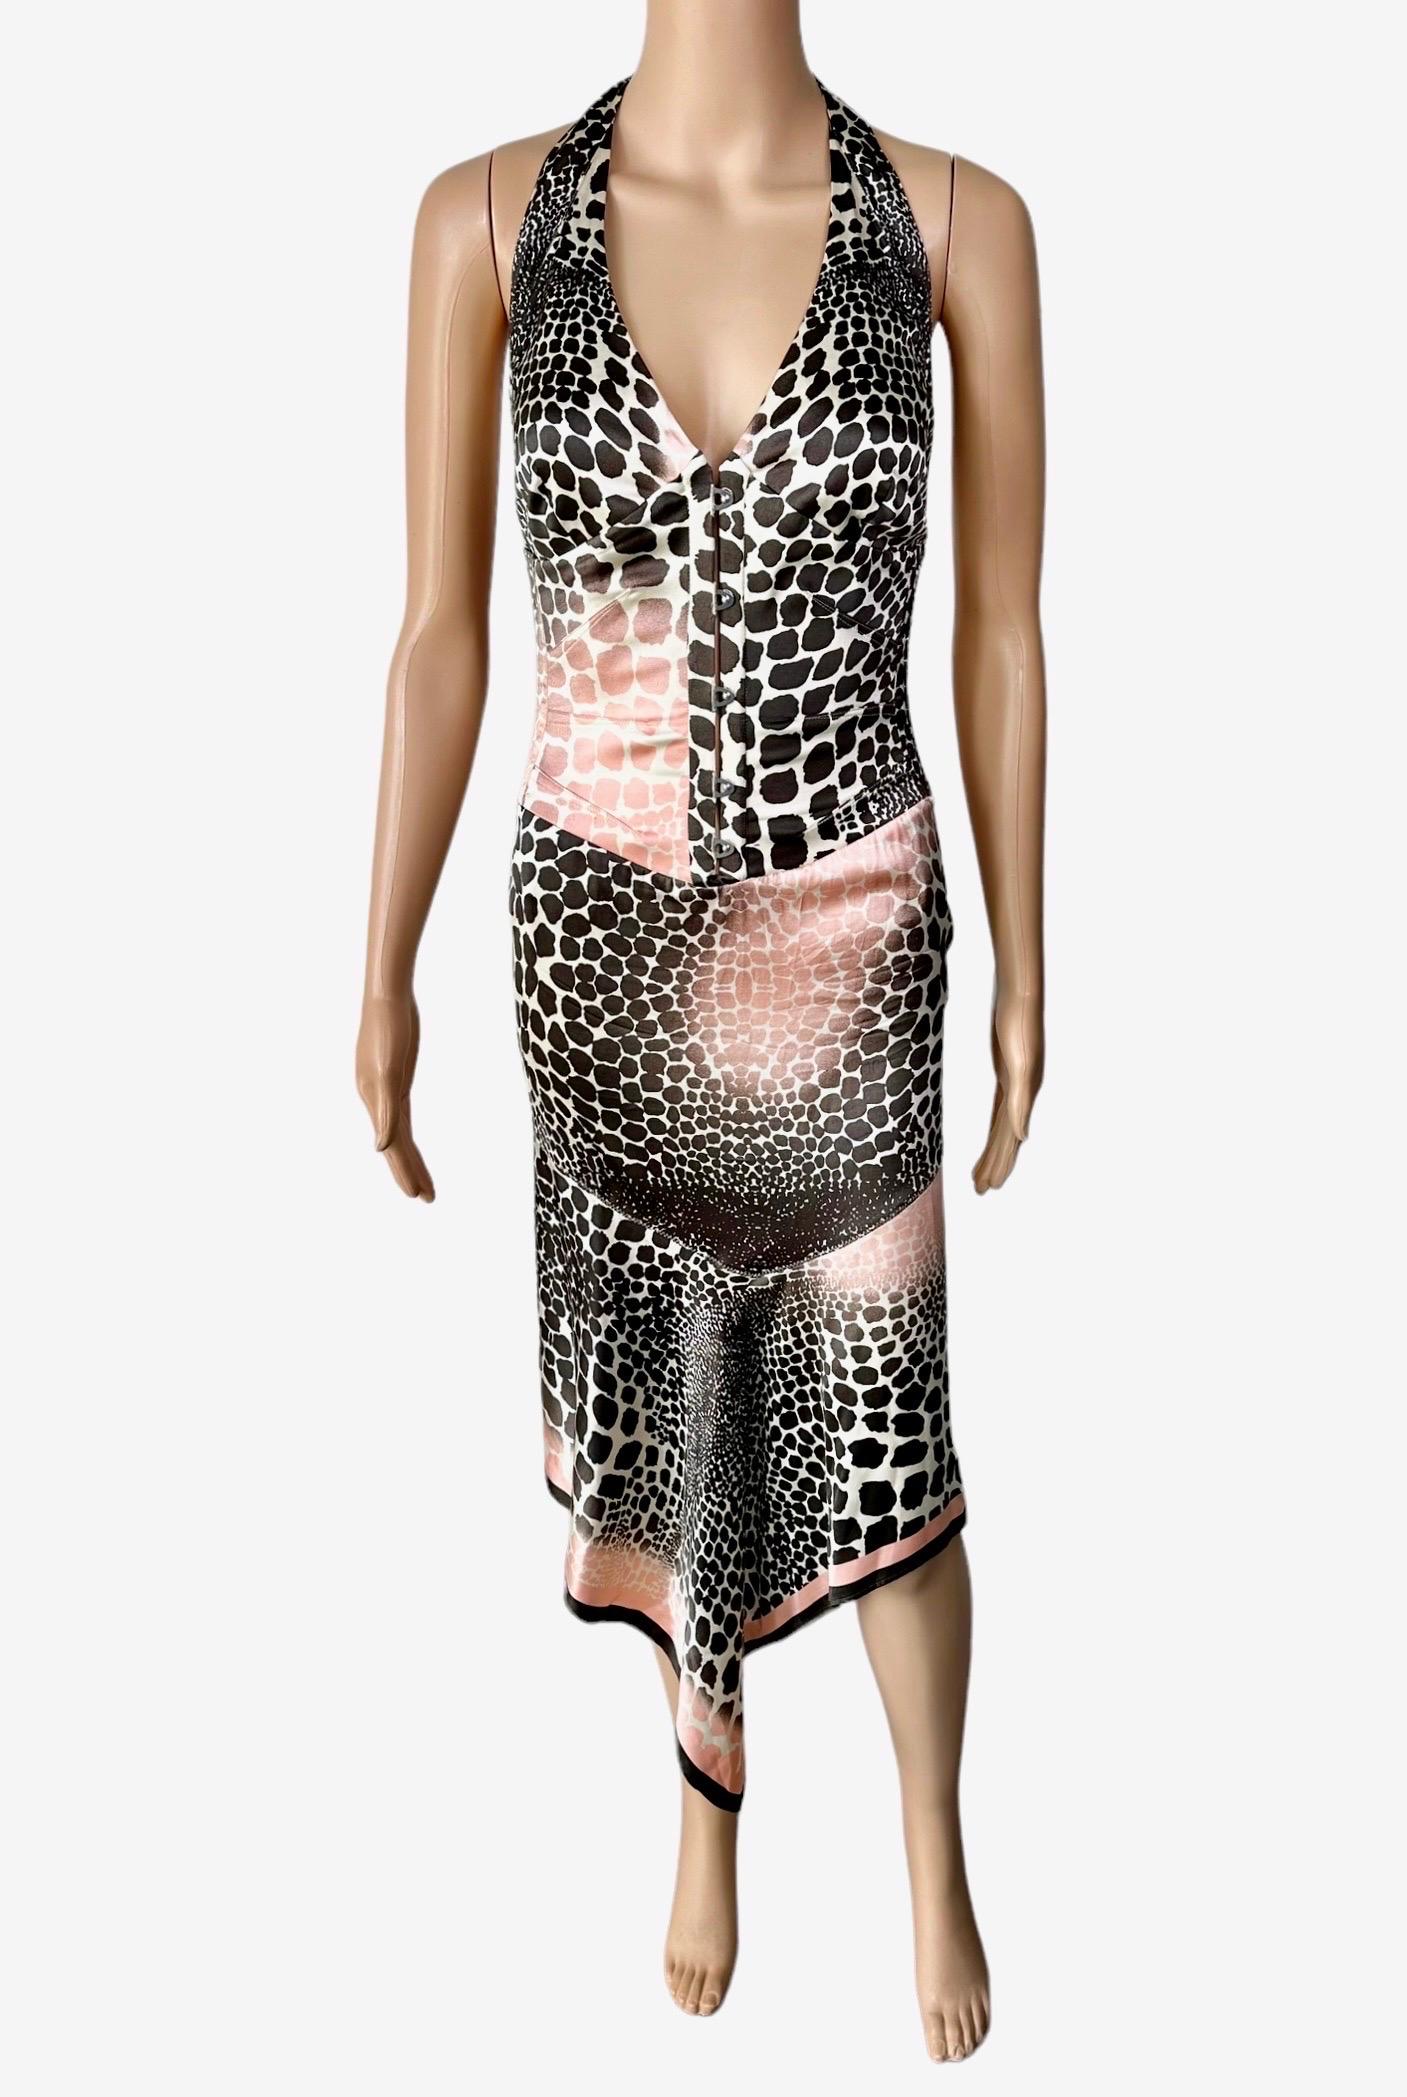 Roberto Cavalli S/S 2003 Corset Lace Up Plunging Neckline Silk Asymmetric Dress For Sale 6